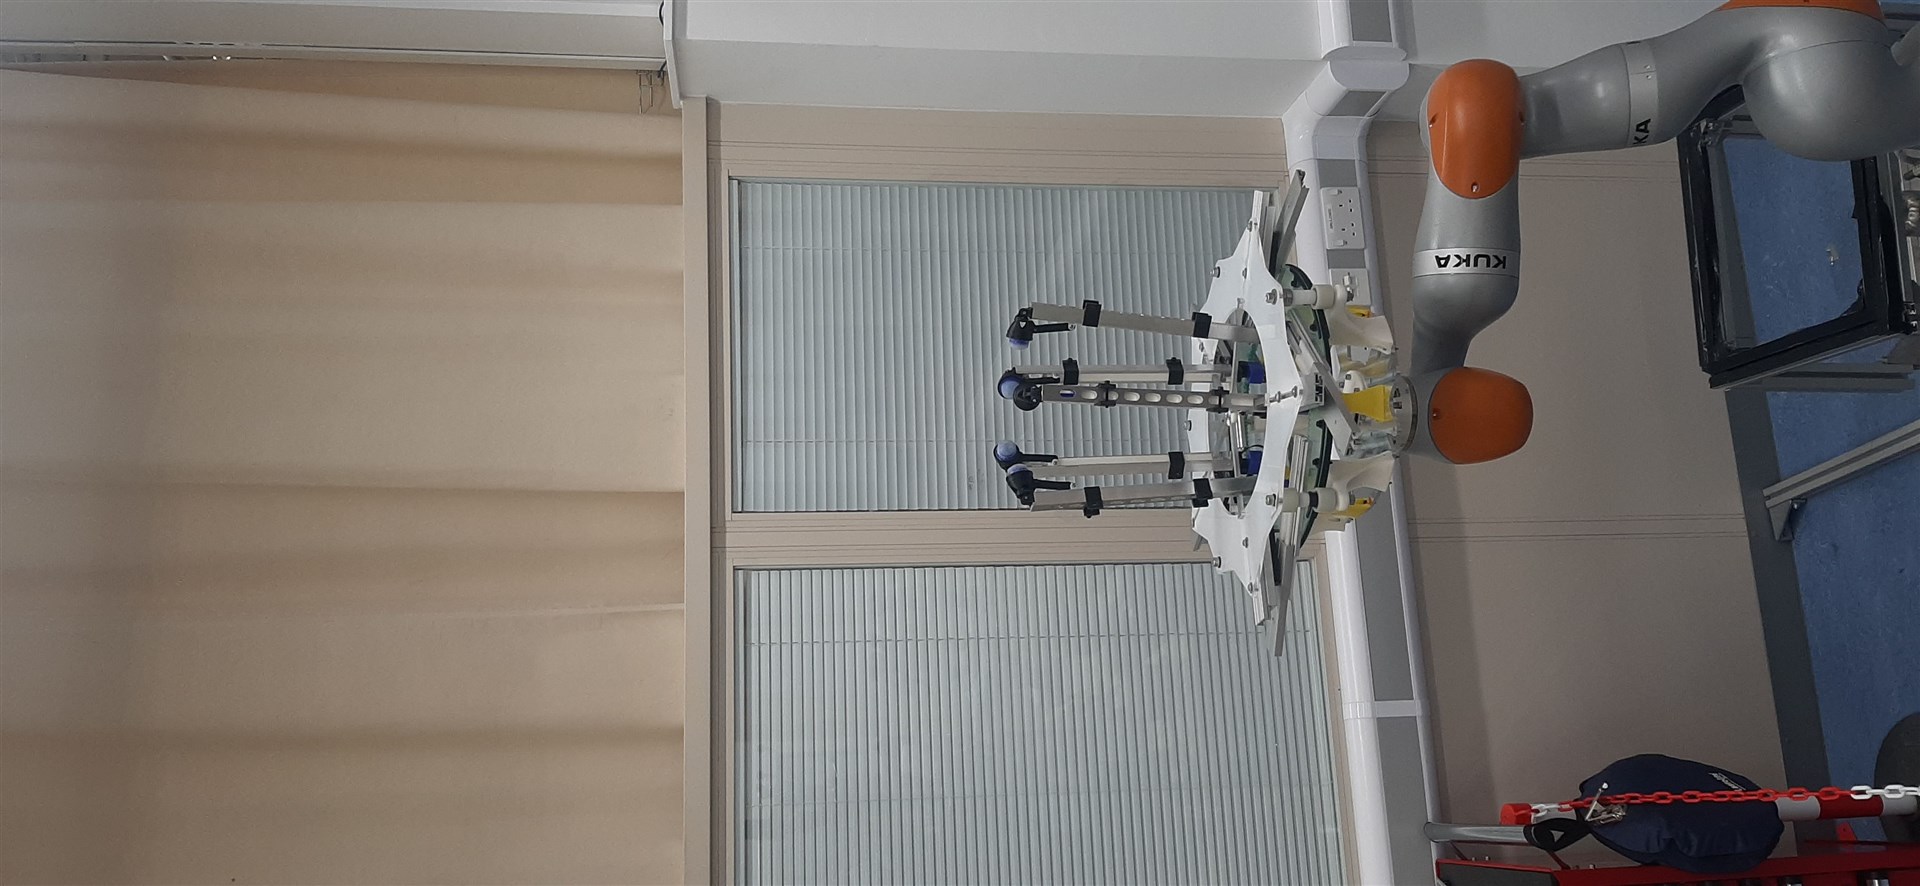 Robot developed by the Bristol Robotics Laboratory at the University of Bristol (George Jenkinson/PA)